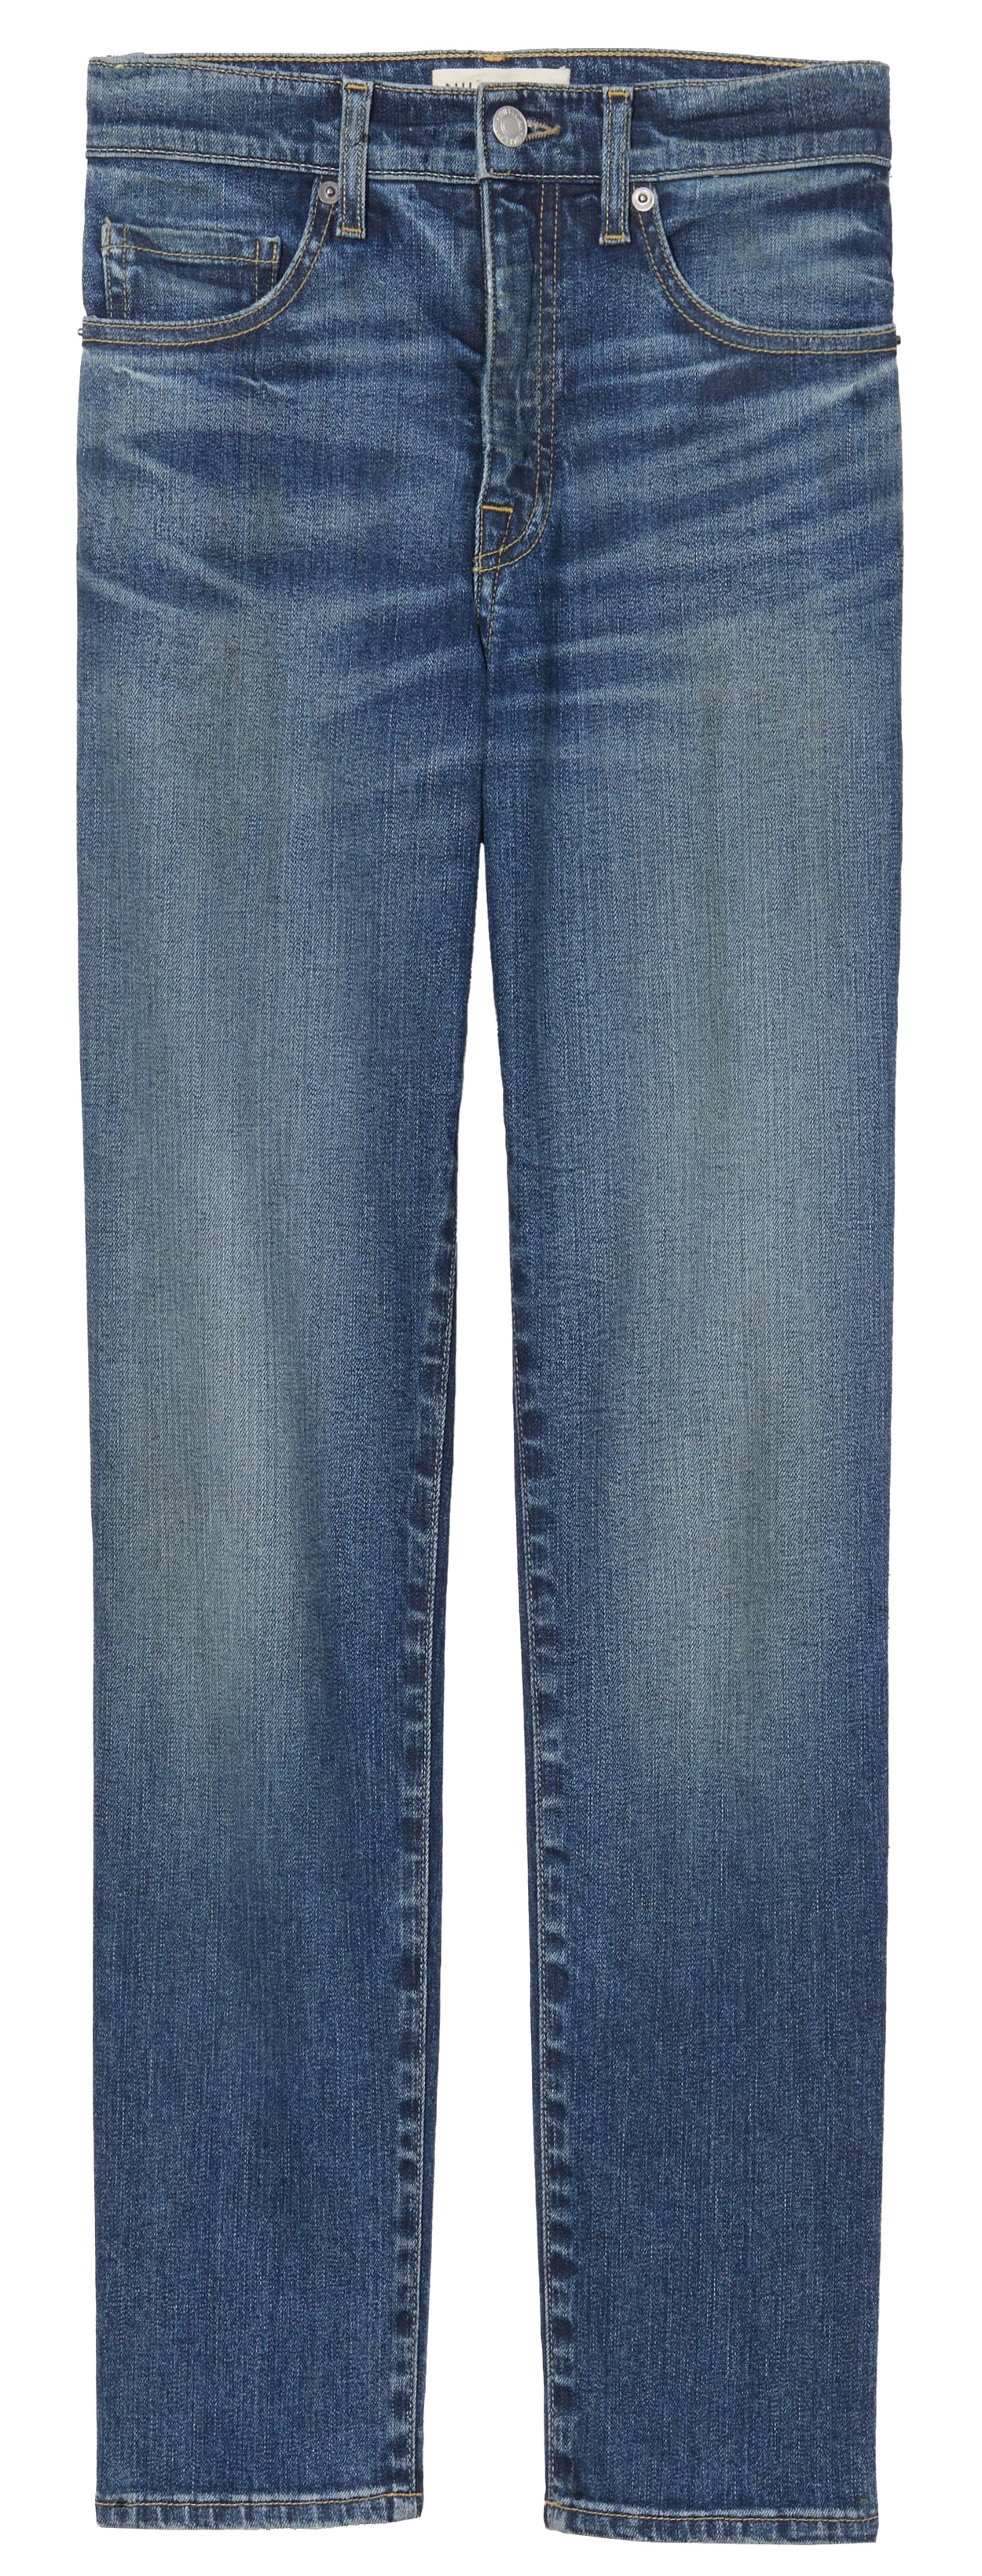 NILI LOTAN Jonas Skinny Jeans in Classic Wash 28